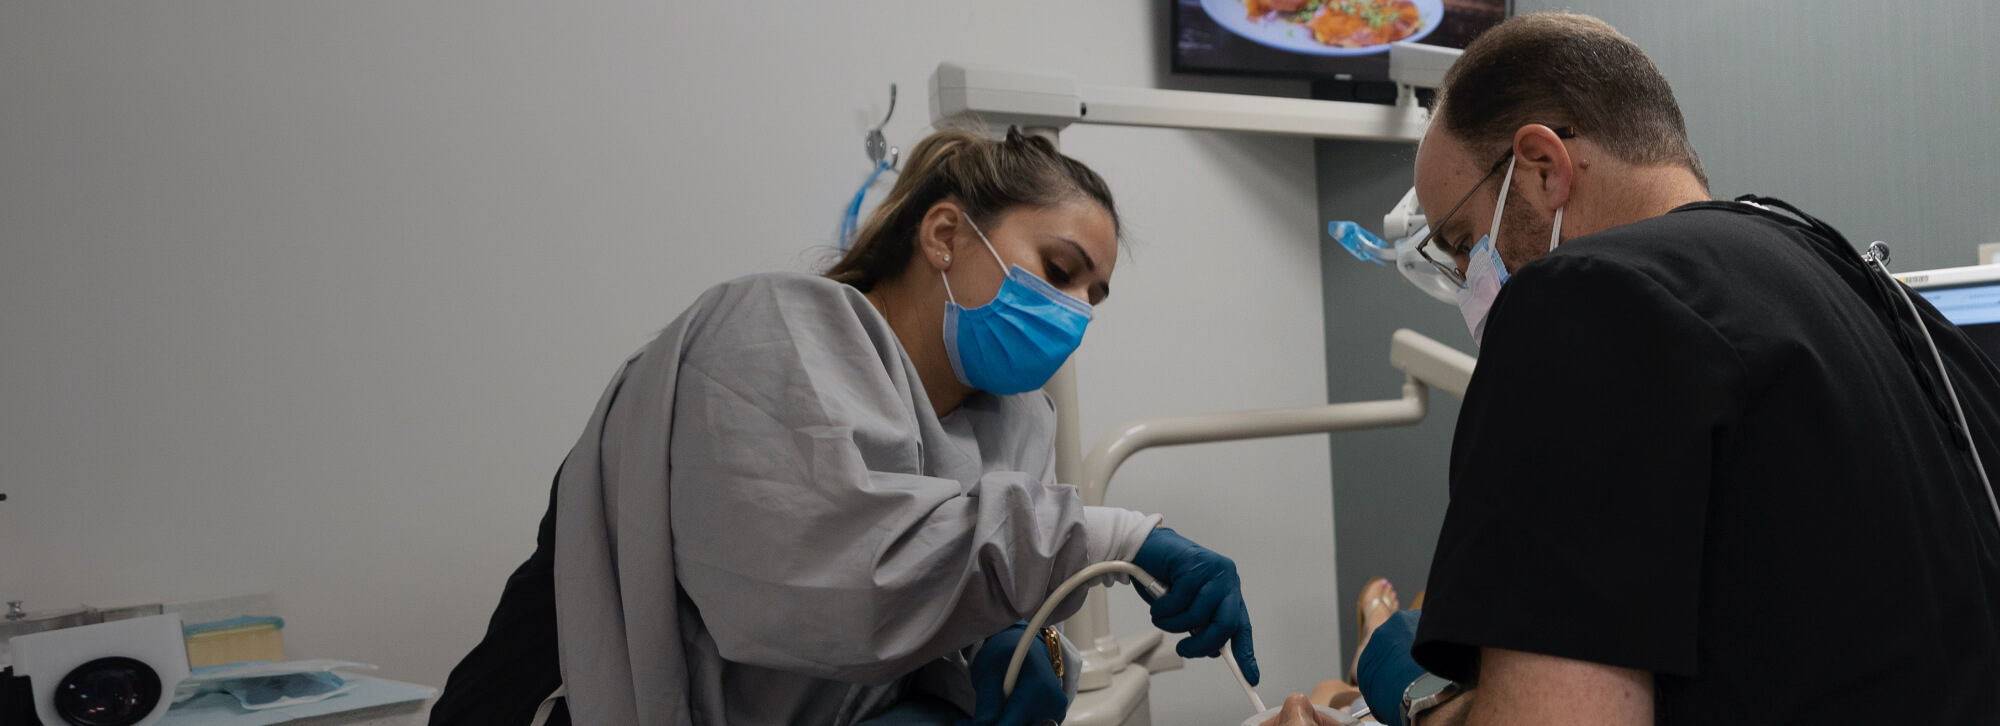 Los Angeles dentist and team member treating dental patient